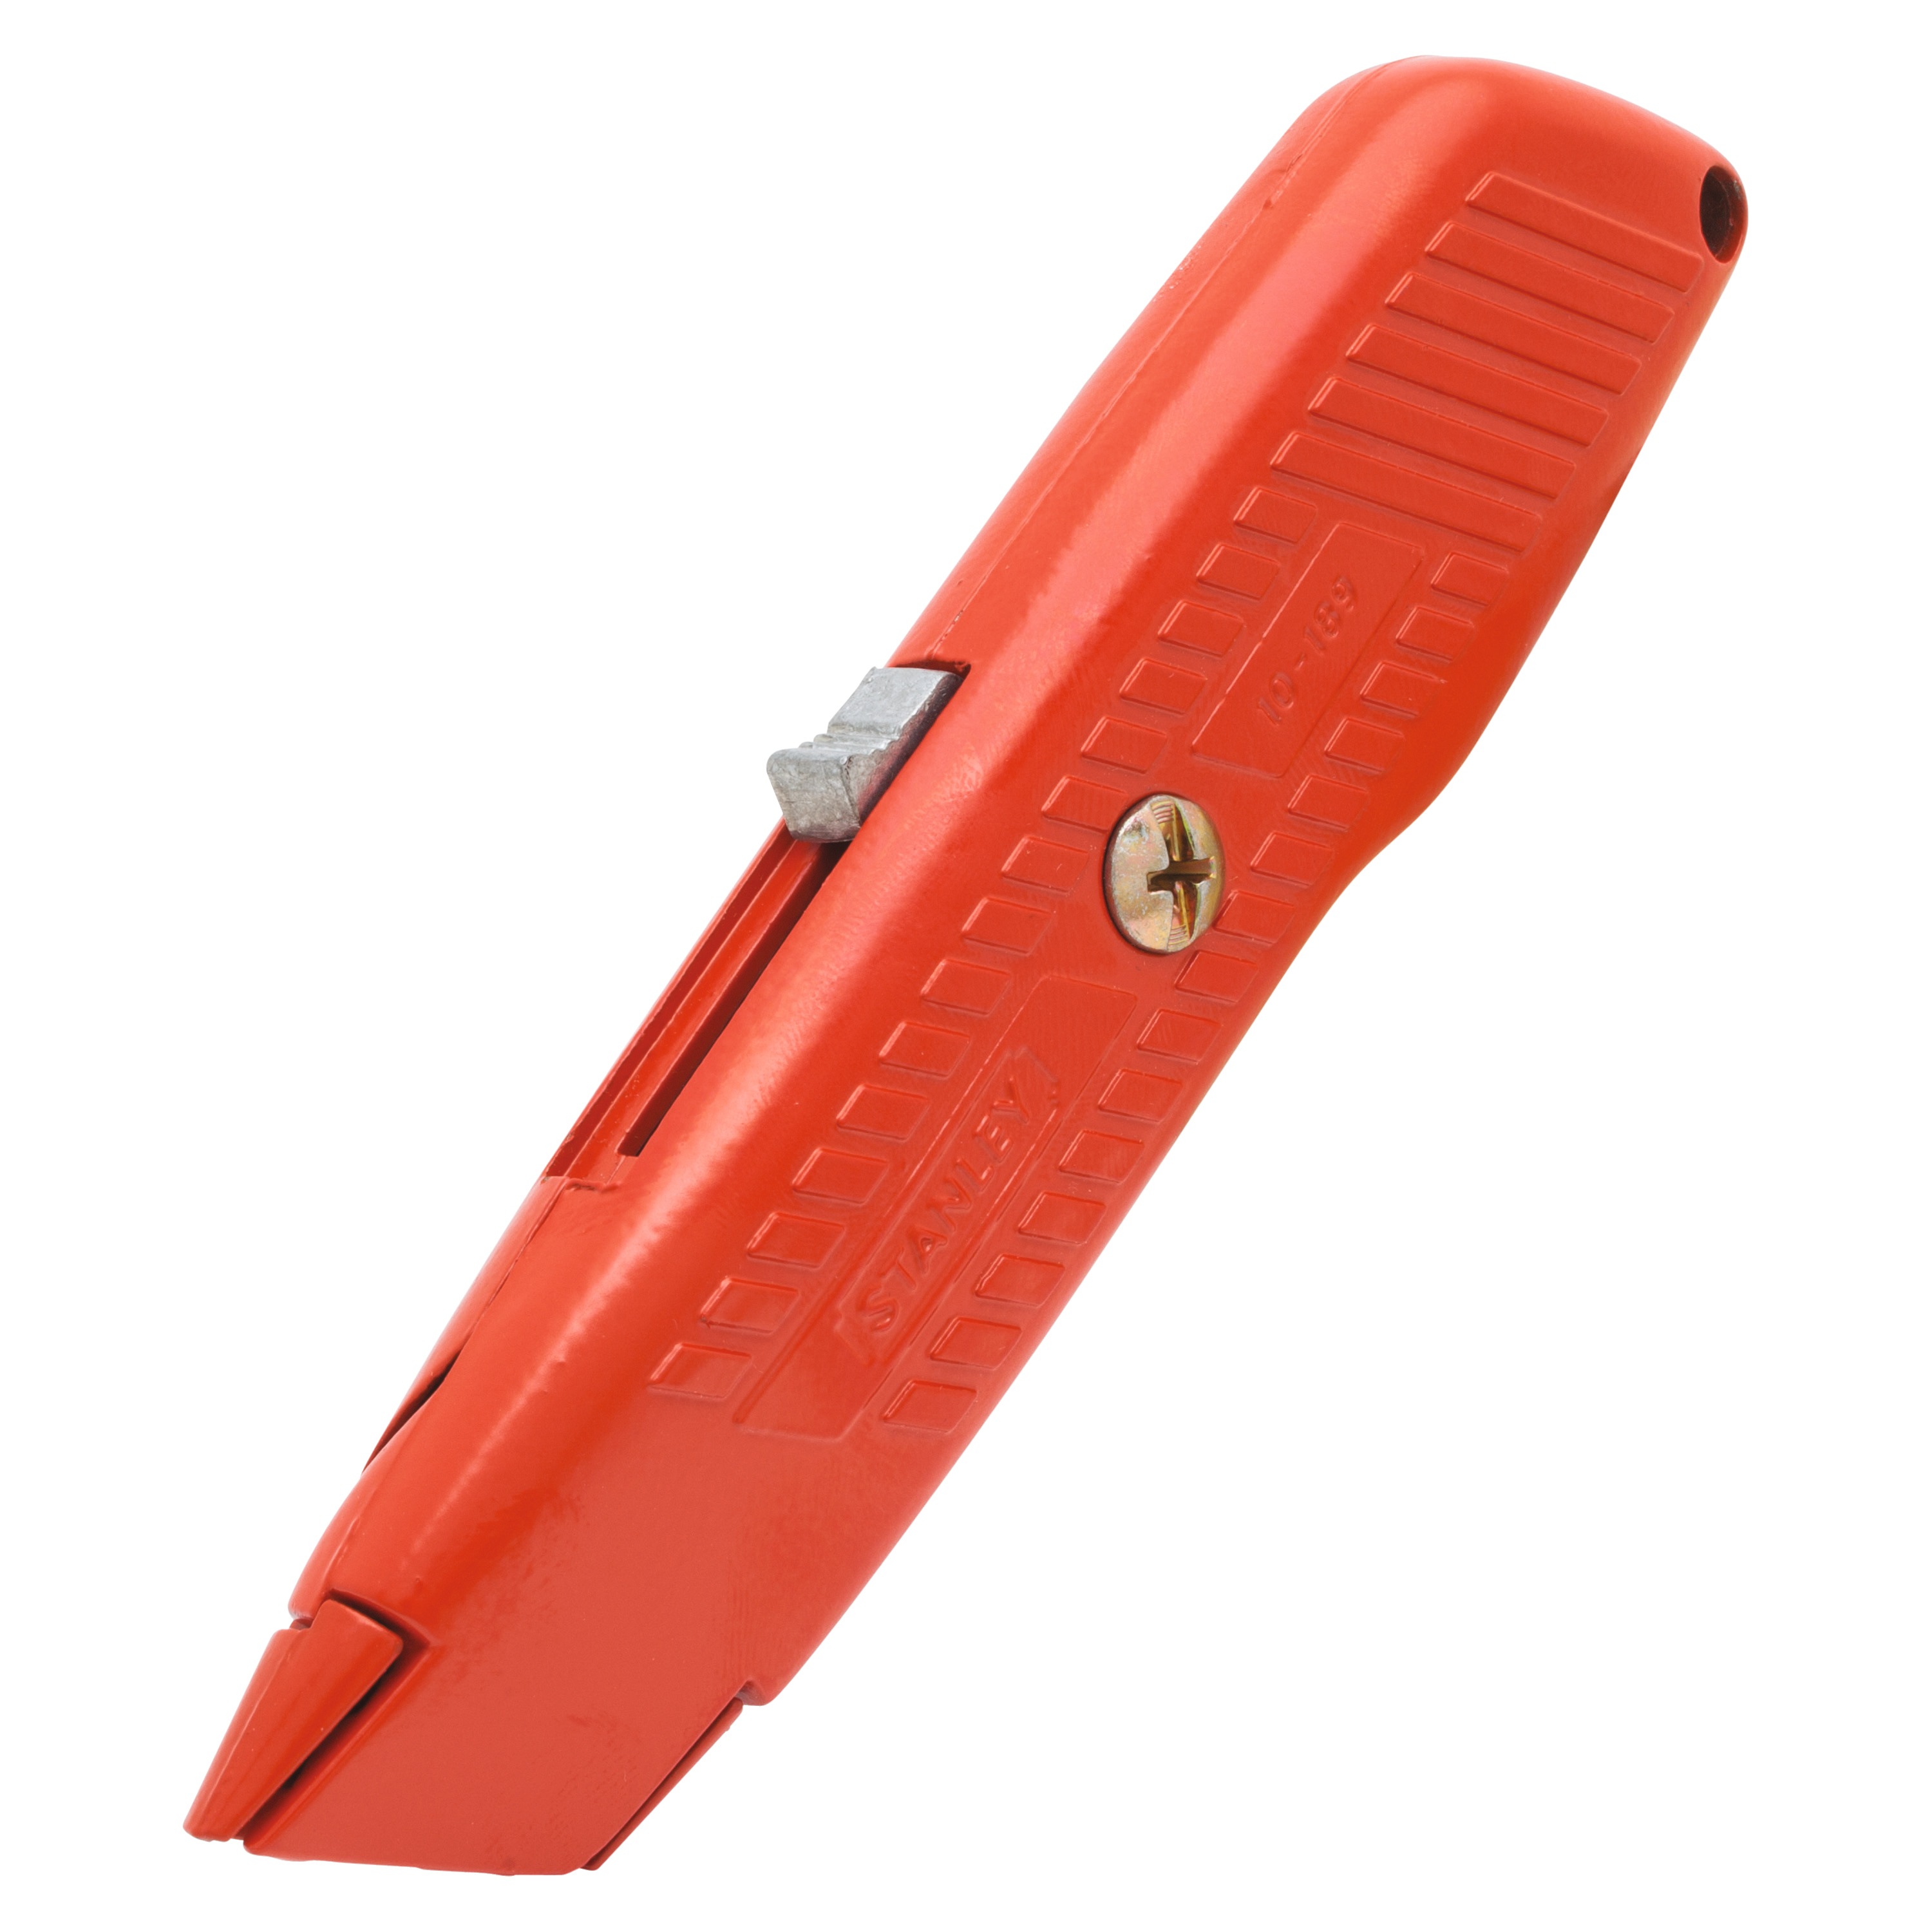 Stanley Tools - SelfRetracting Safety Utility Knife  Orange - 10-189C